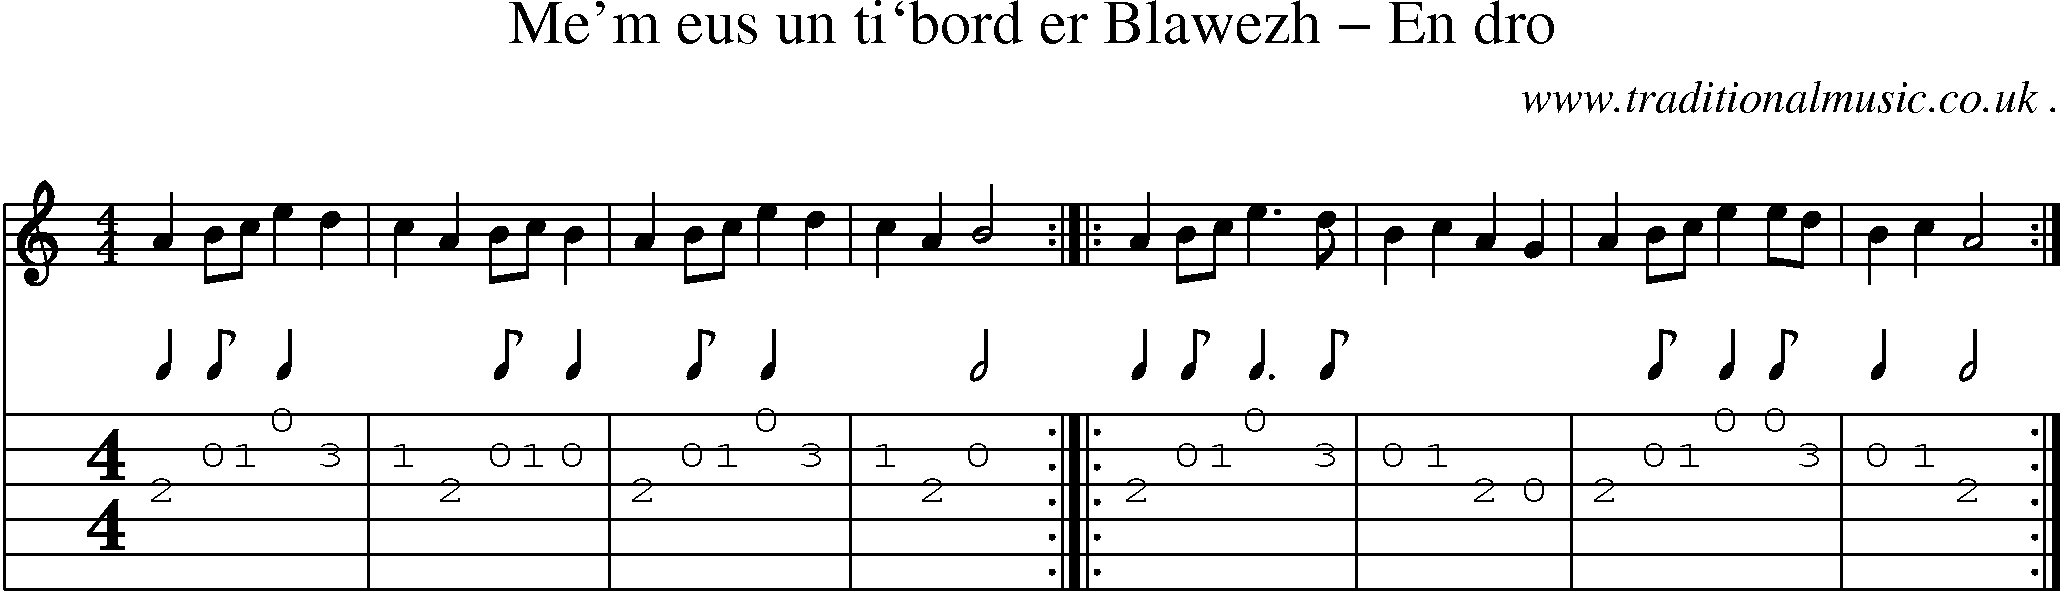 Sheet-Music and Guitar Tabs for Mem Eus Un Ti`bord Er Blawezh En Dro